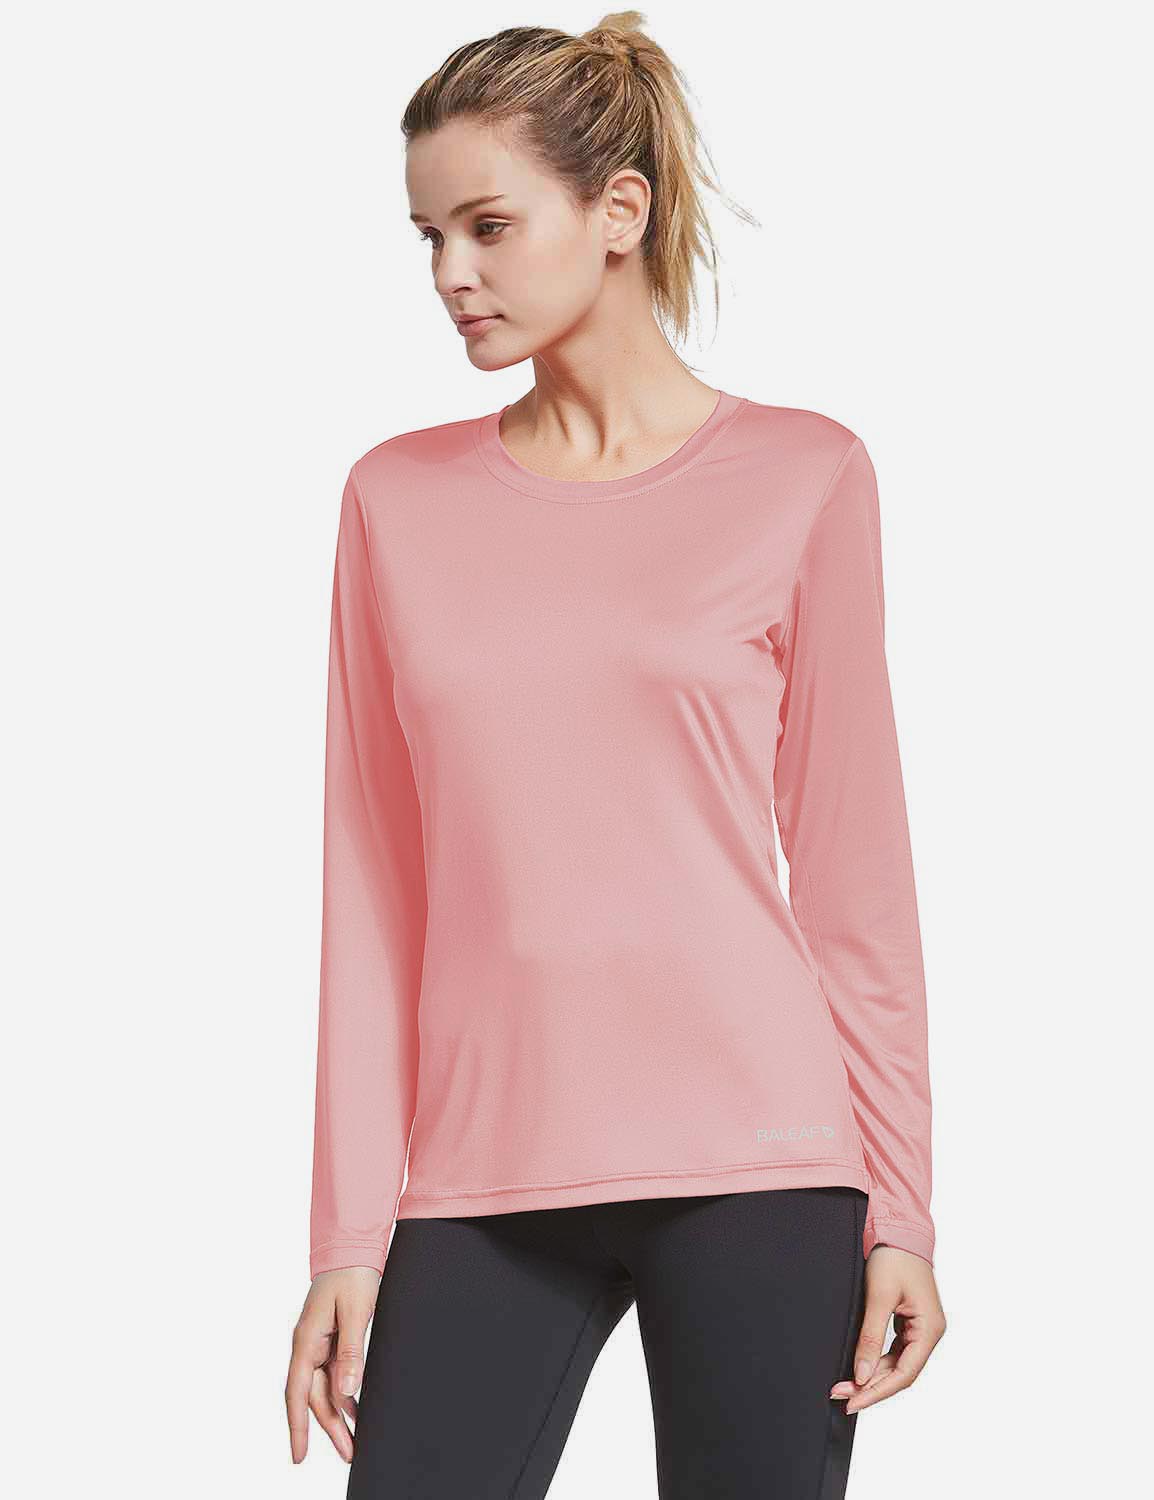 BALEAF Women's Loose Fit Tagless Workout Long Sleeved Shirt	abd294 Pink Front